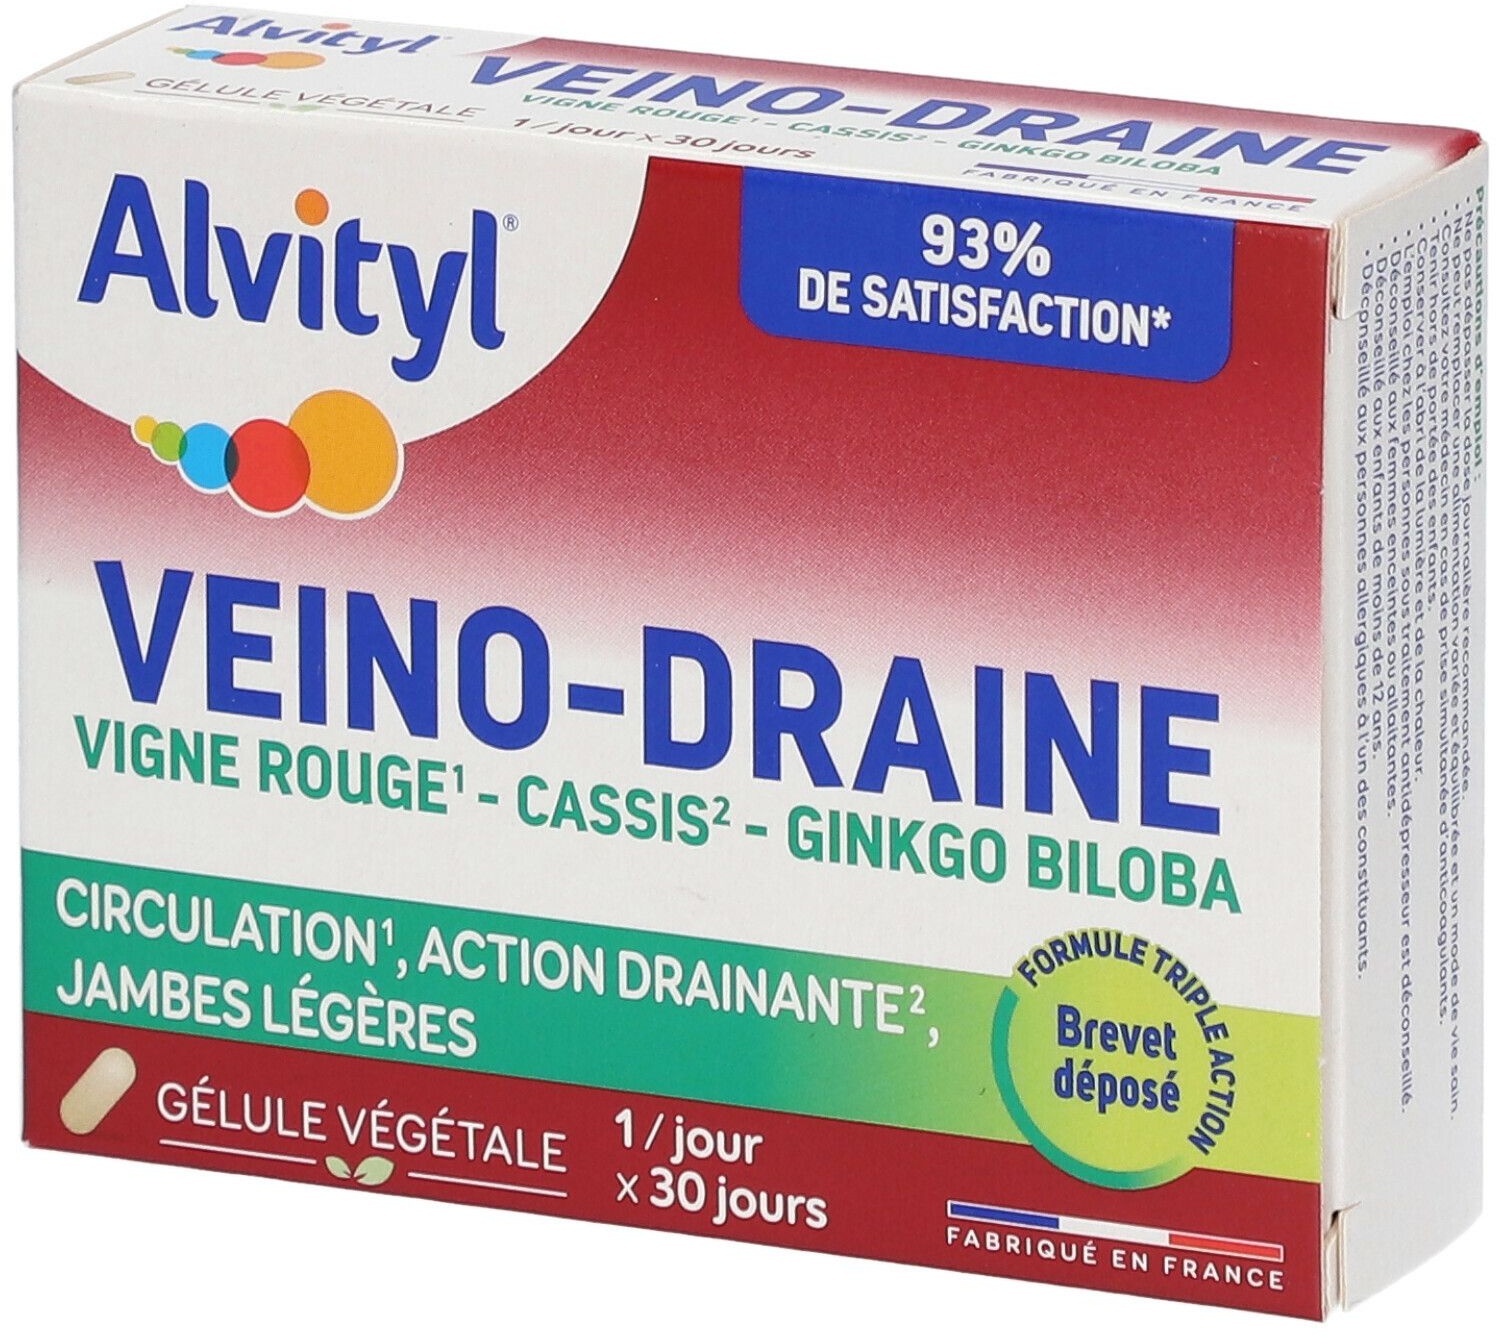 ALVITYL® Veino-draine 30 pc(s) capsule(s)